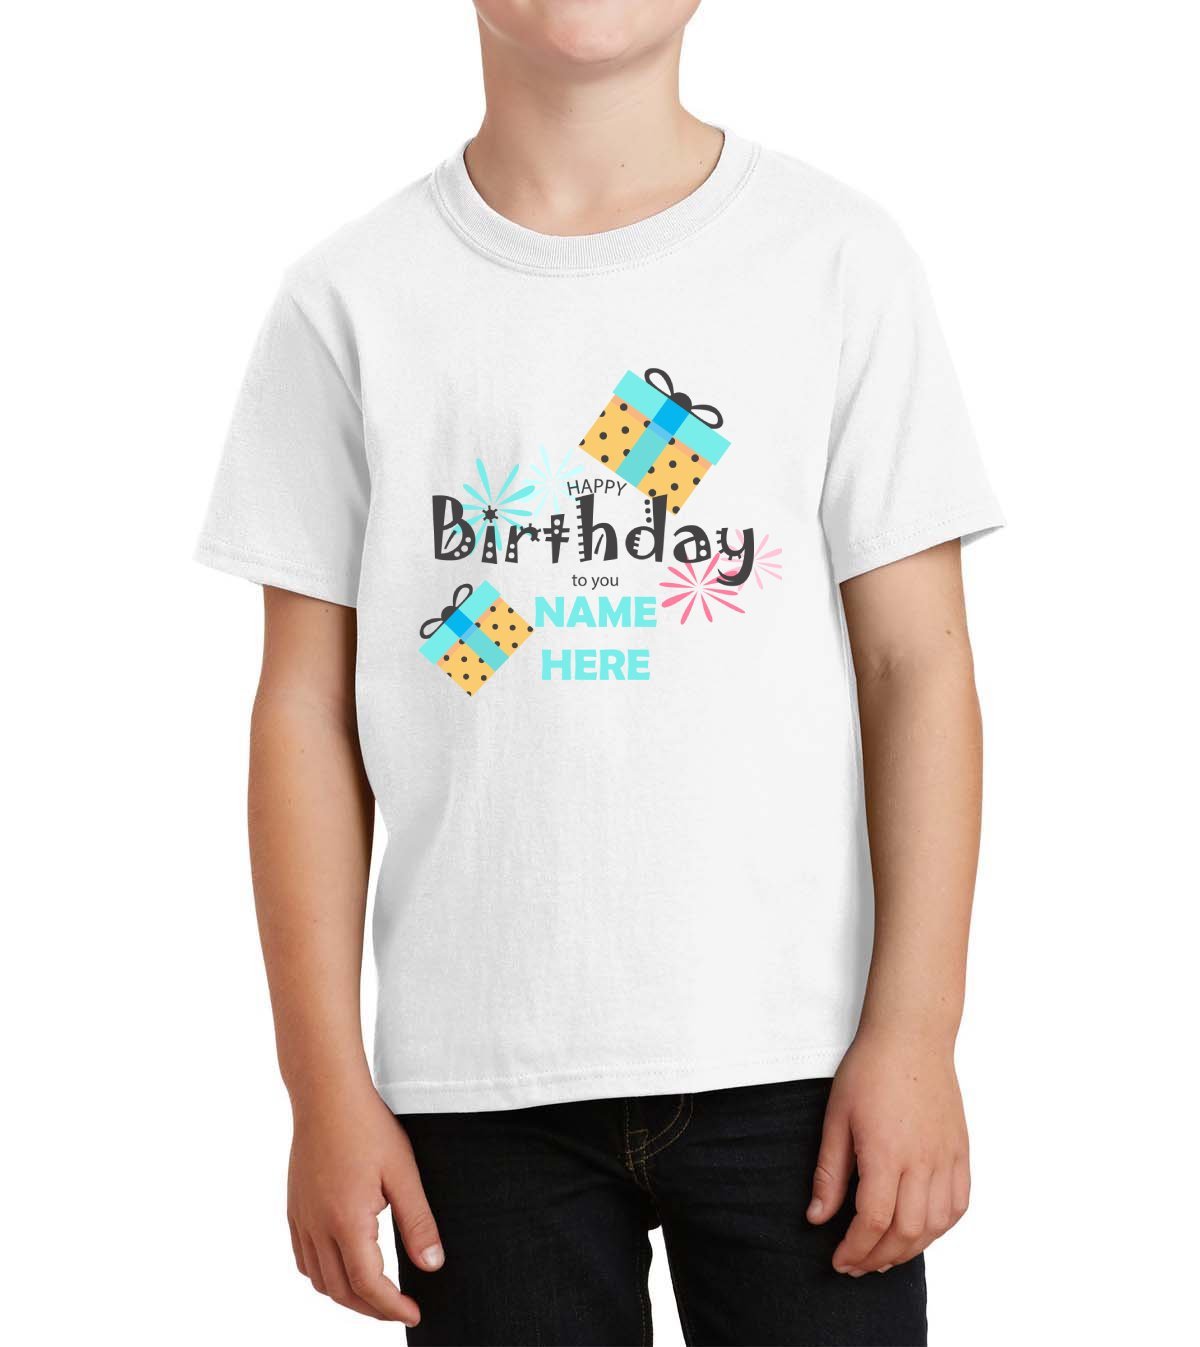 Happy B-Day White Cotton T-shirt Kids